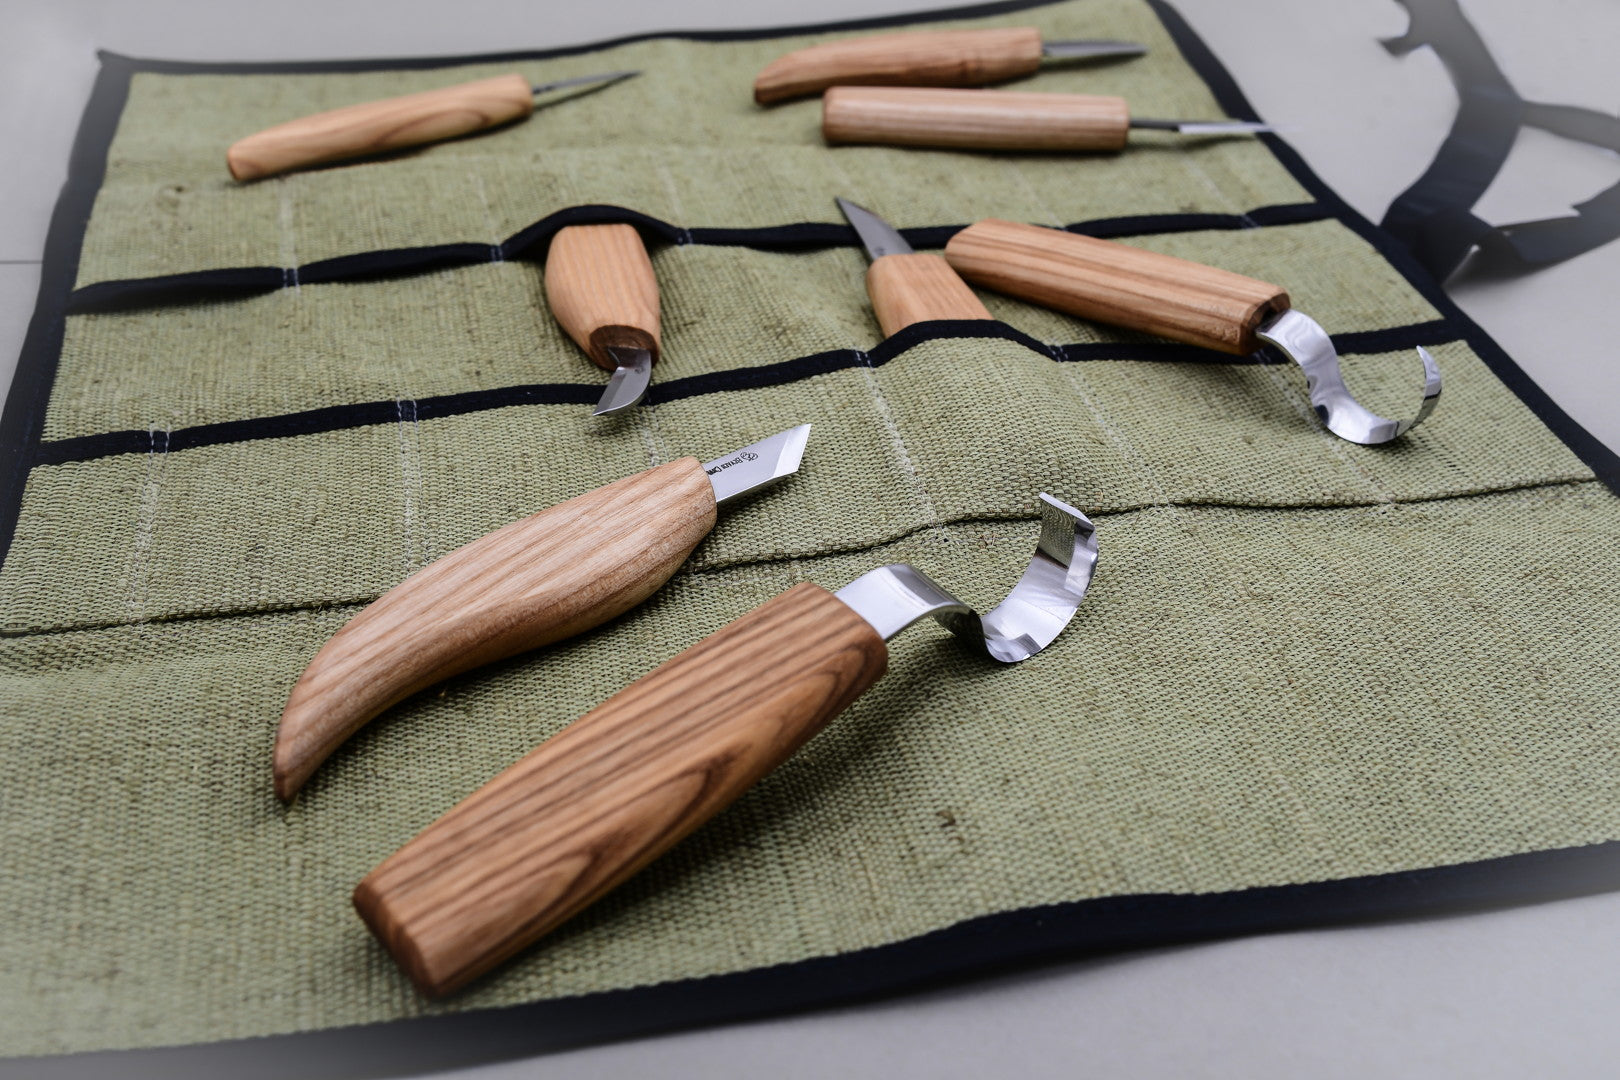 Wood carving set of 10 tools professional wood carving set BeaverCraft